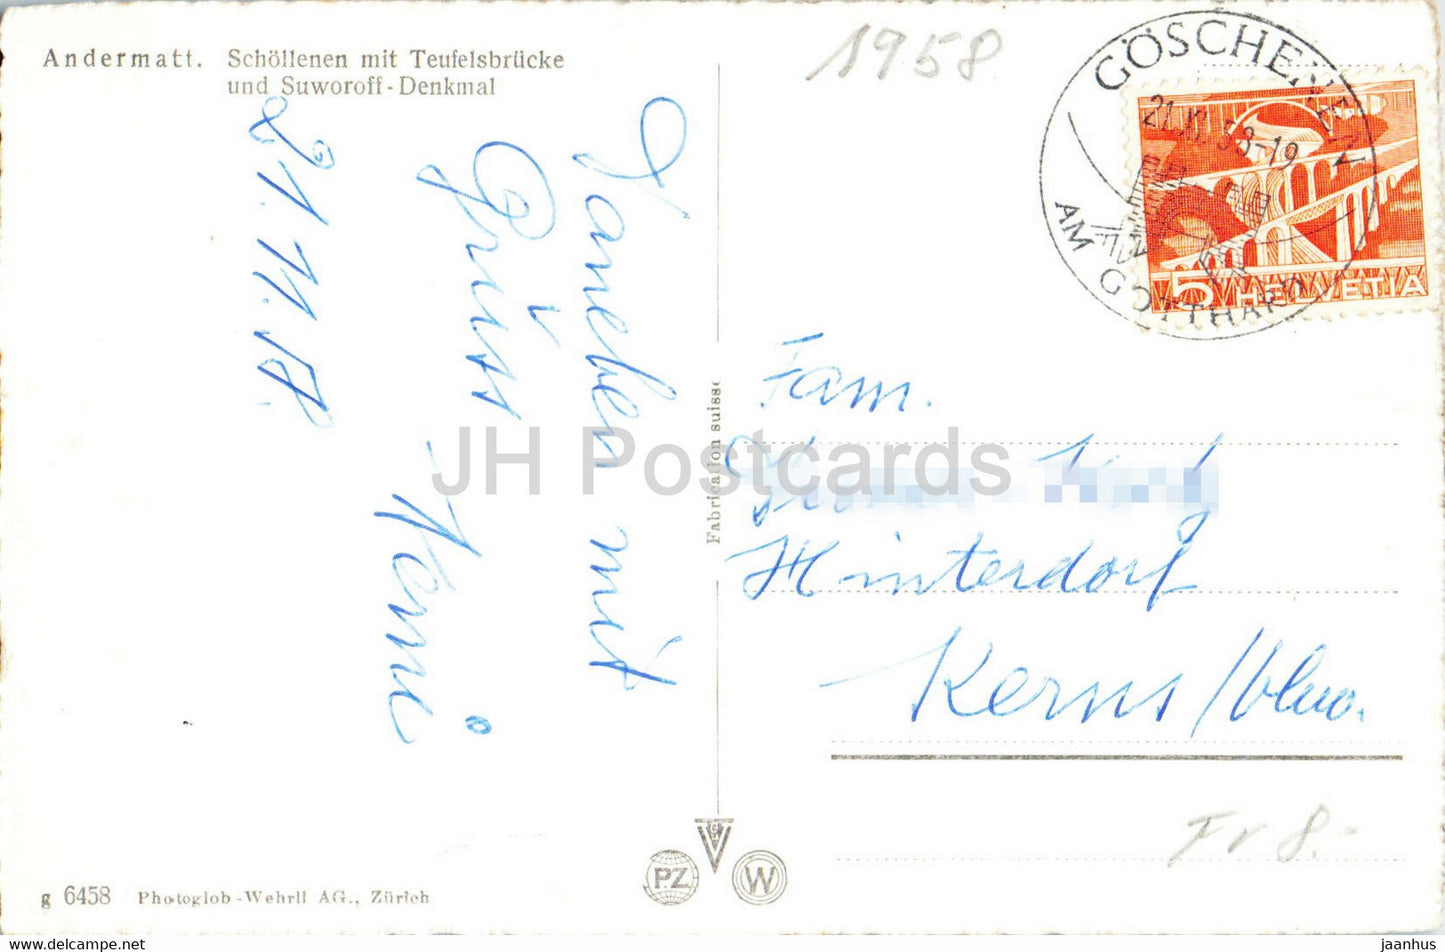 Andermatt - Schollenen mit Teufelsbrucke und Suworoff Denkmal - multiview - 1958 - carte postale ancienne - Suisse - utilisé